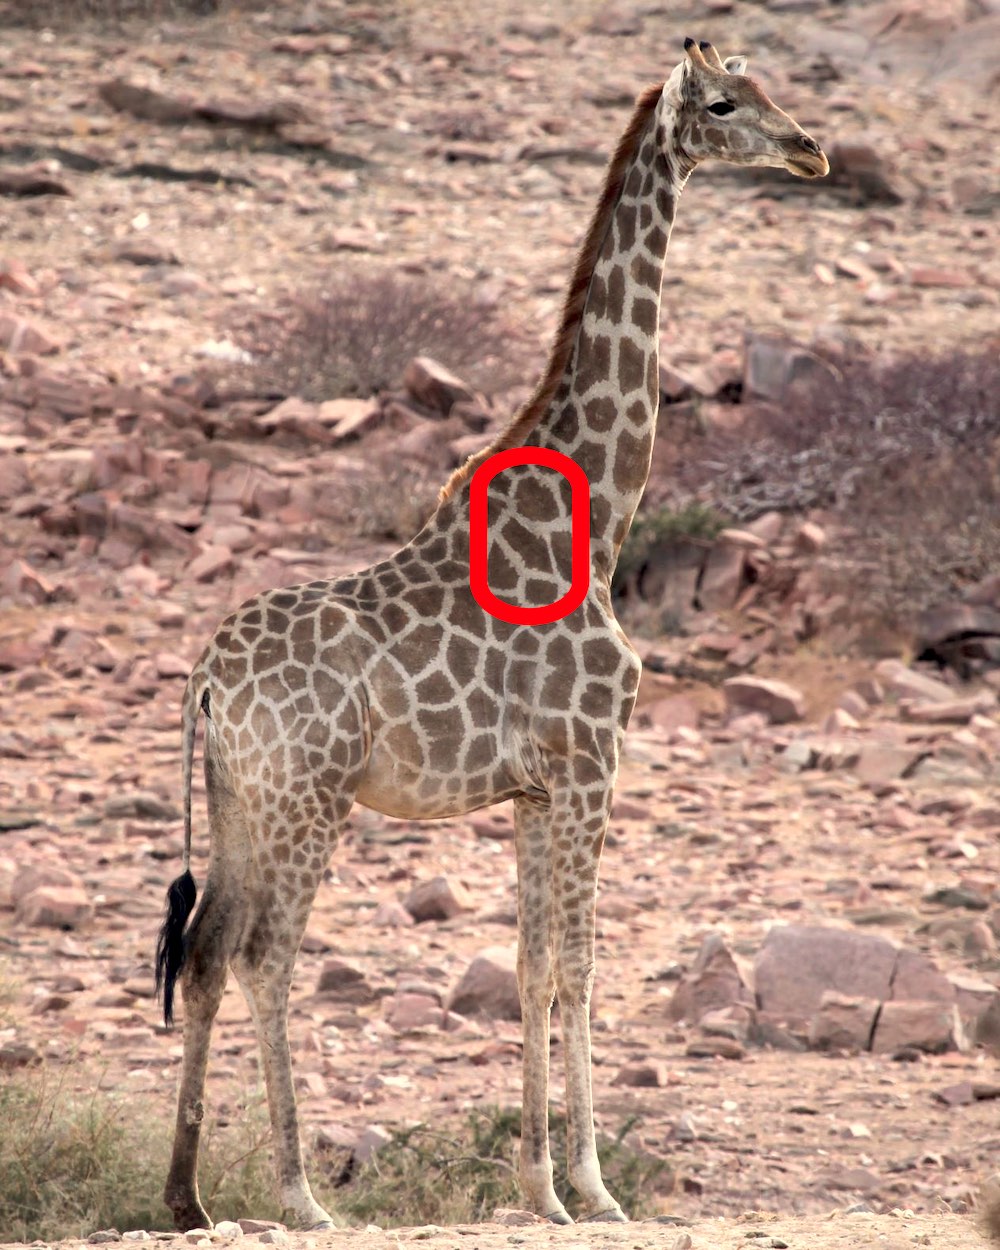 Female (mother) giraffe with a distinctive arrow shape on her neck.